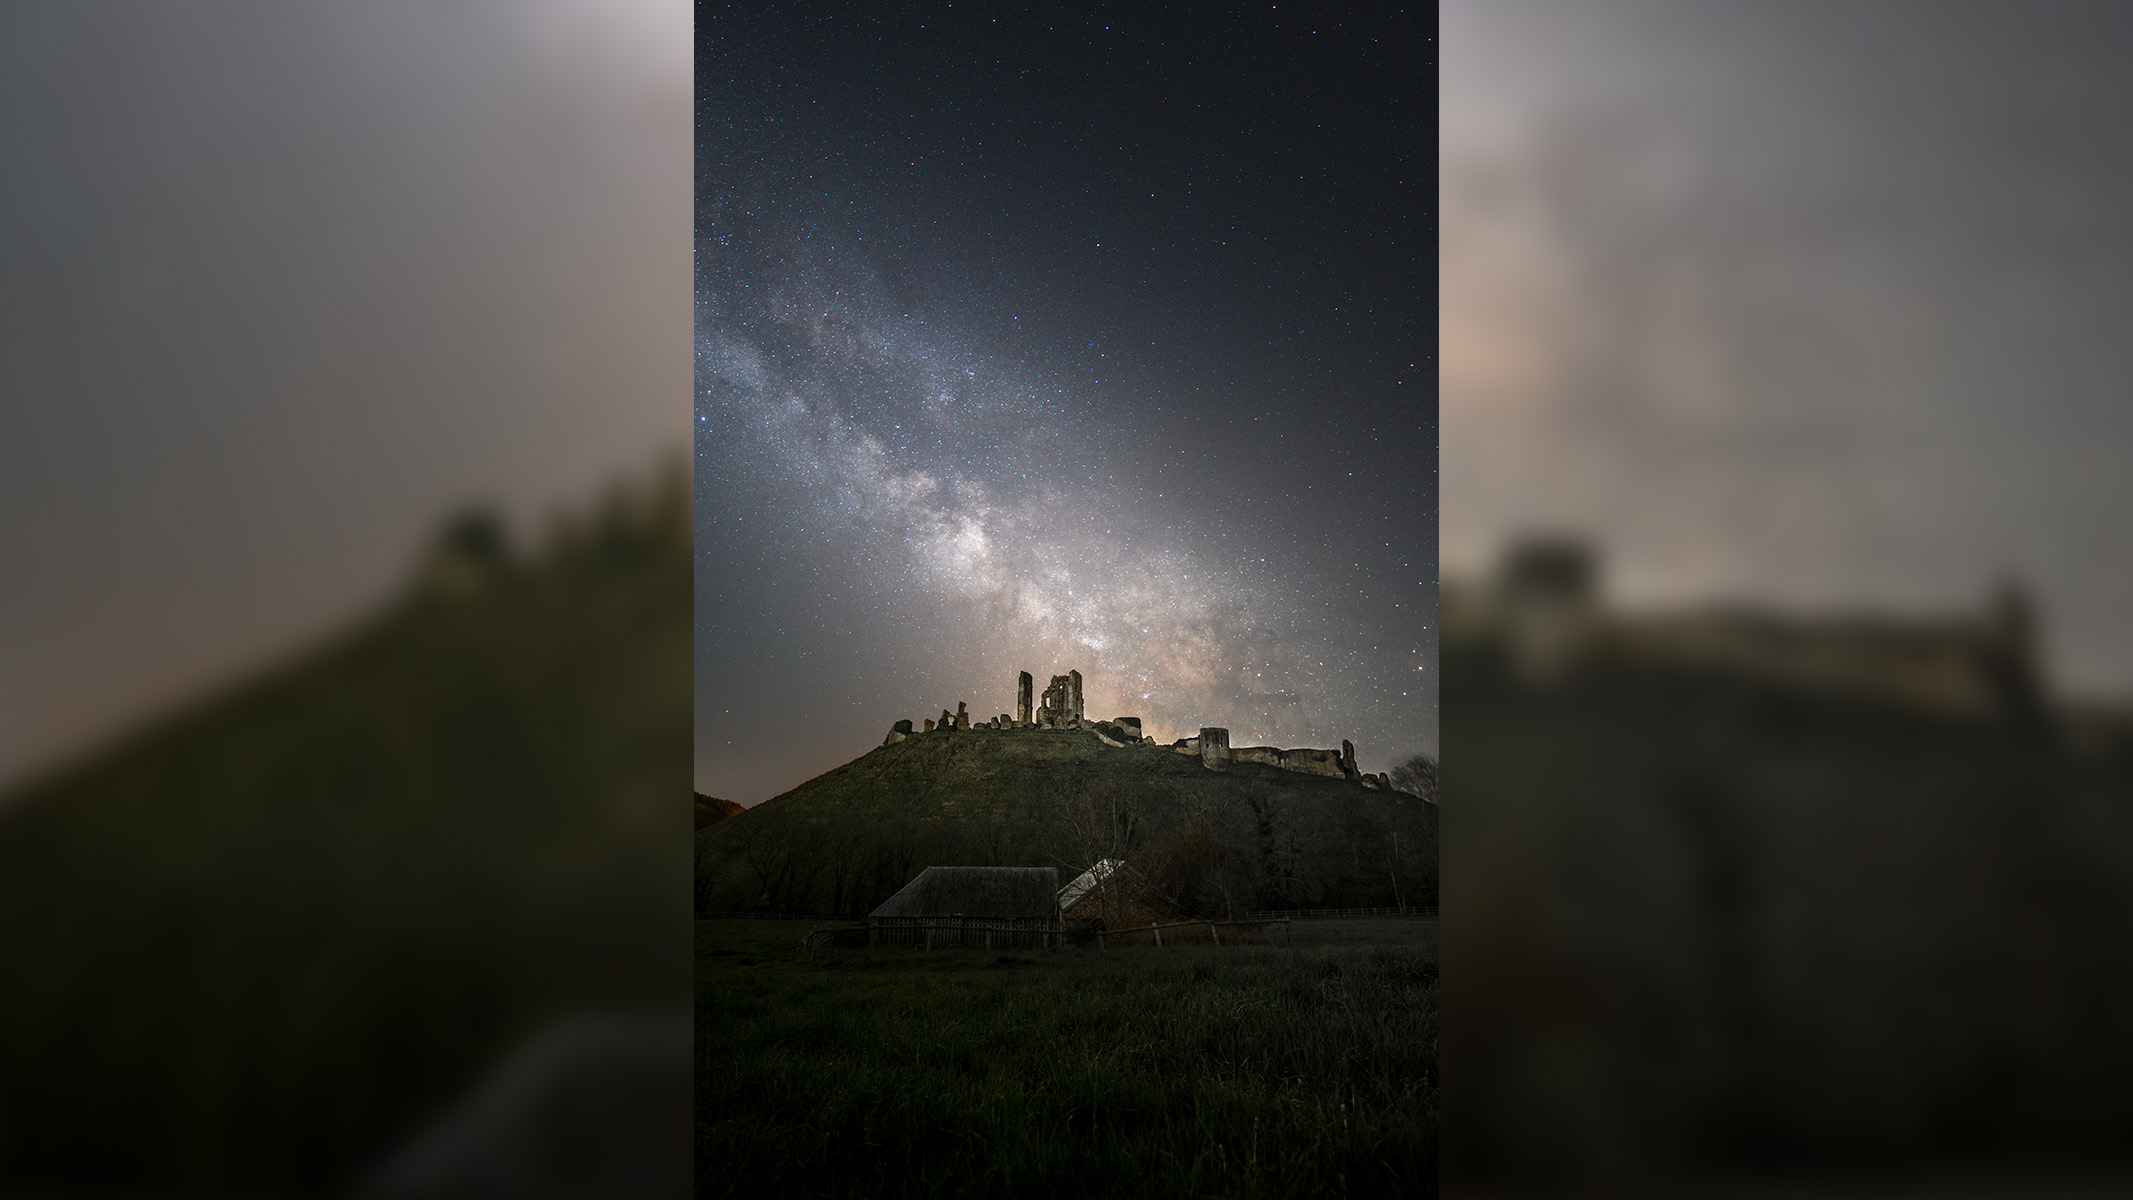 The Milky Way captured above the ruins of Corfe Castle — Dorset, UK.